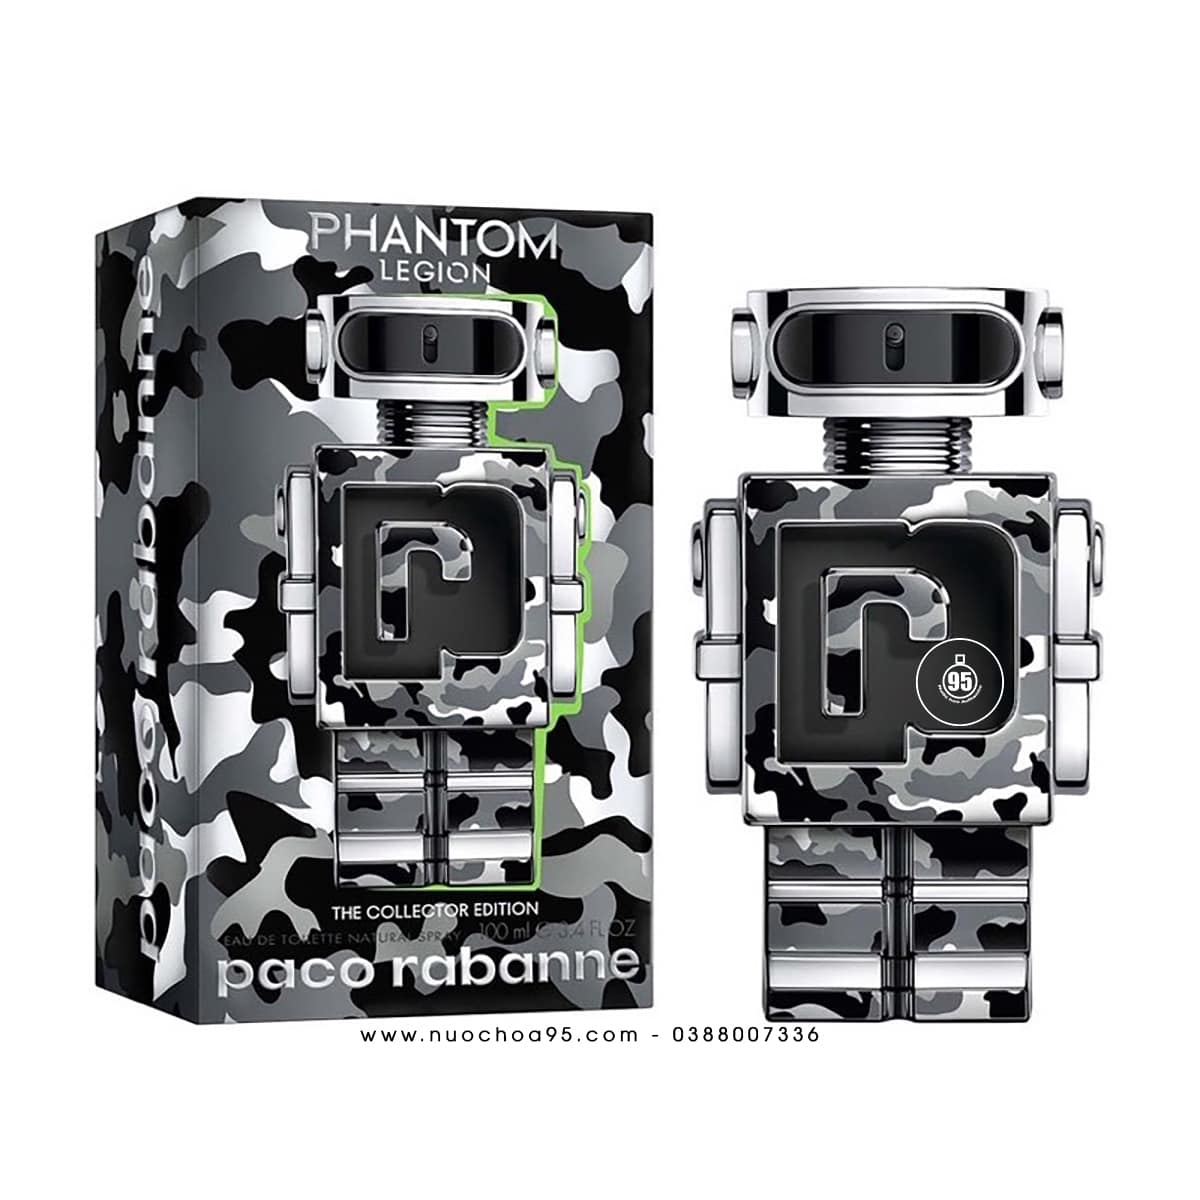 Nước hoa Paco Rabanne Phantom Legion EDT Limited